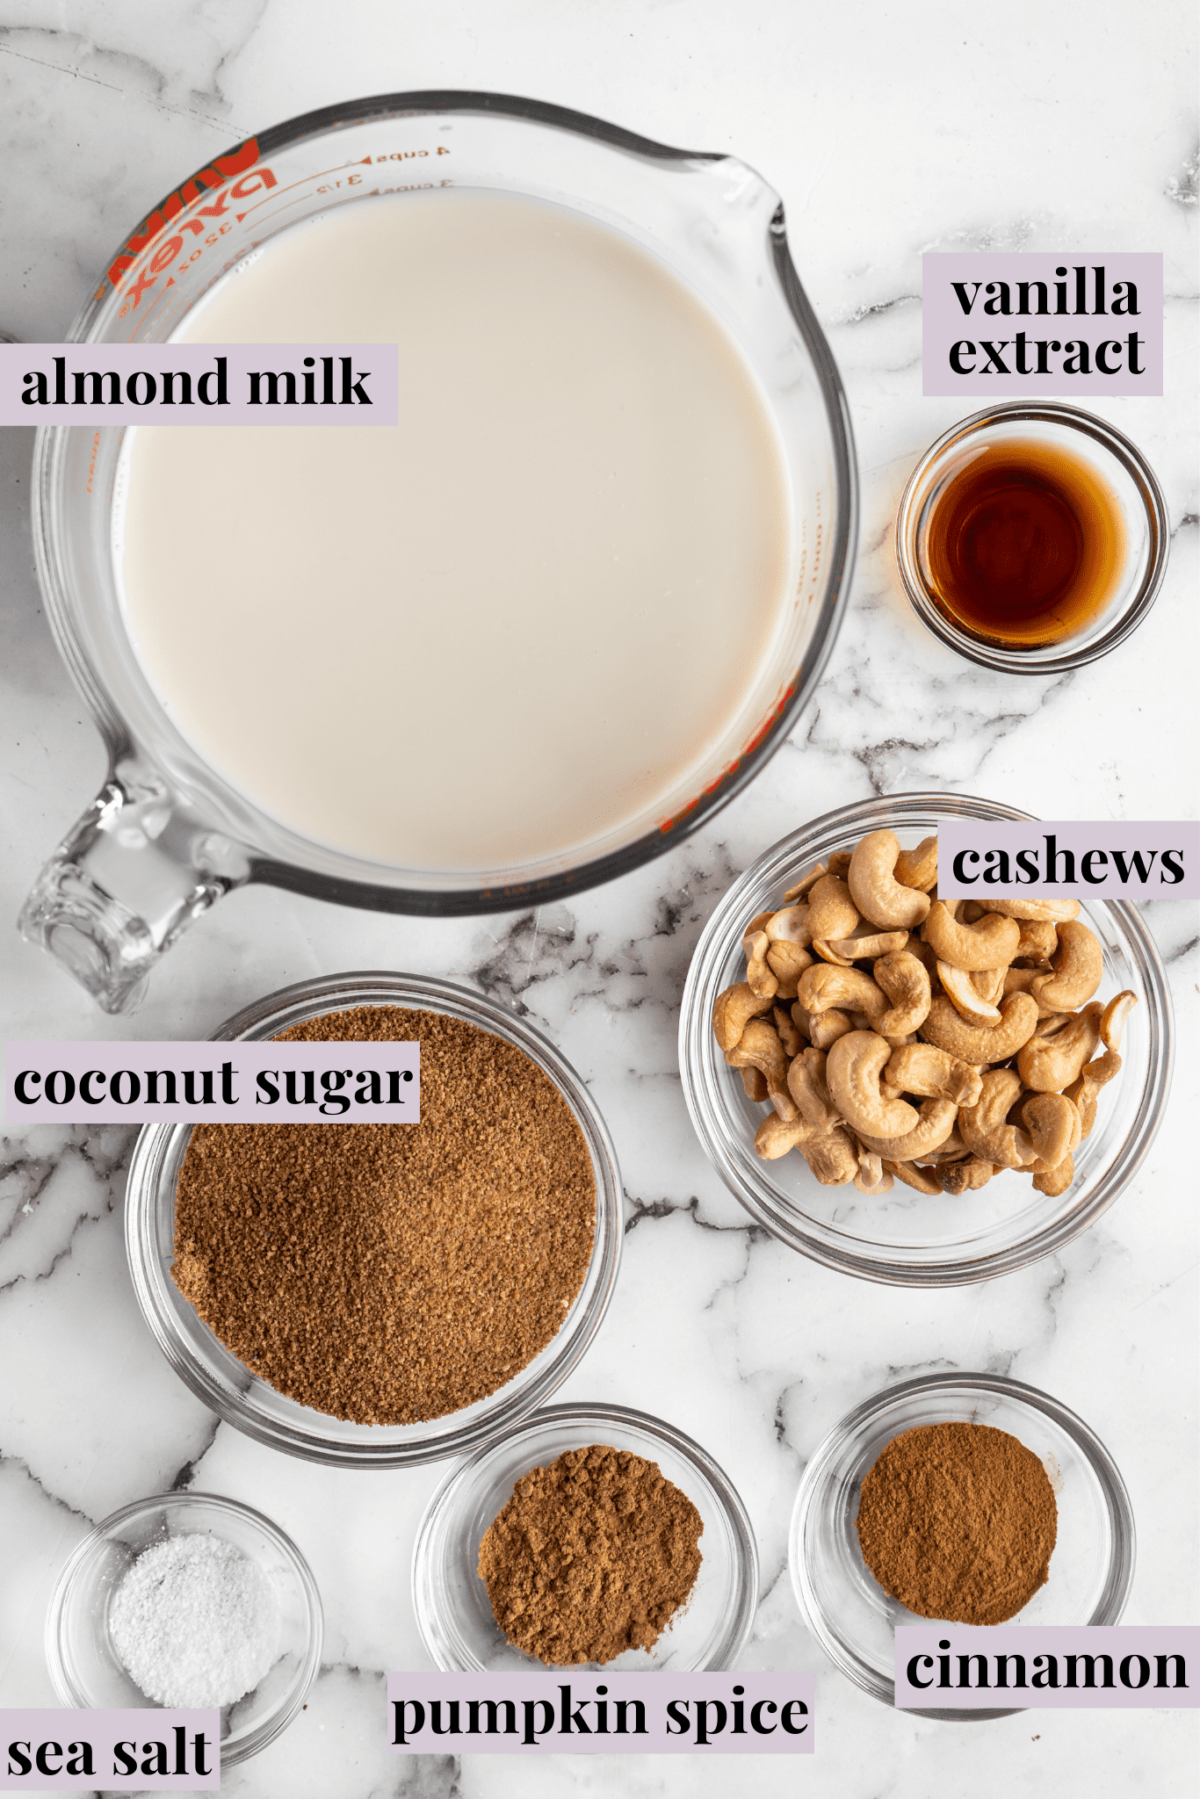 Overhead view of the labeled ingredients needed for vegan eggnog: almond milk, vanilla extract, cashews, coconut sugar, salt, cinnamon, and pumpkin spice